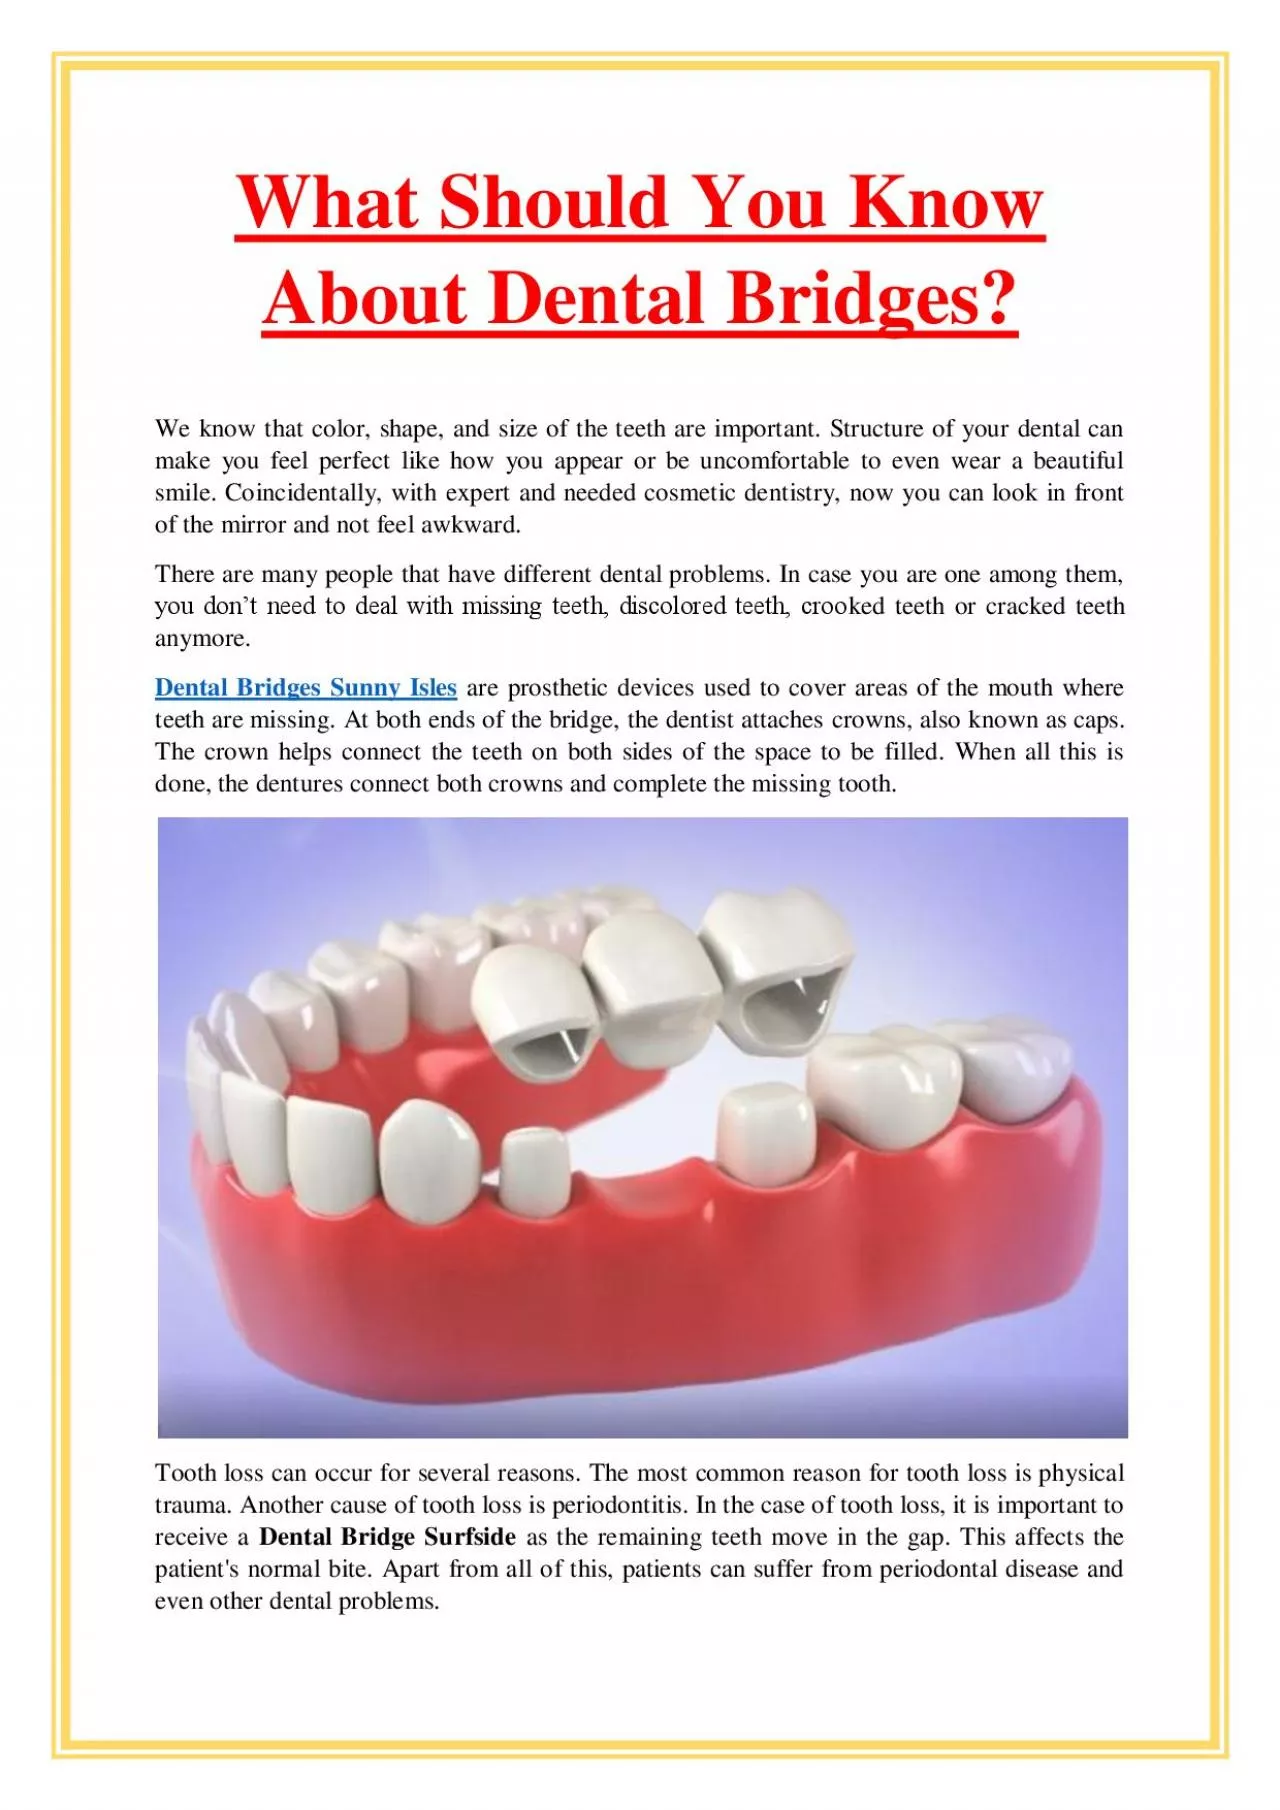 What Should You Know About Dental Bridges?